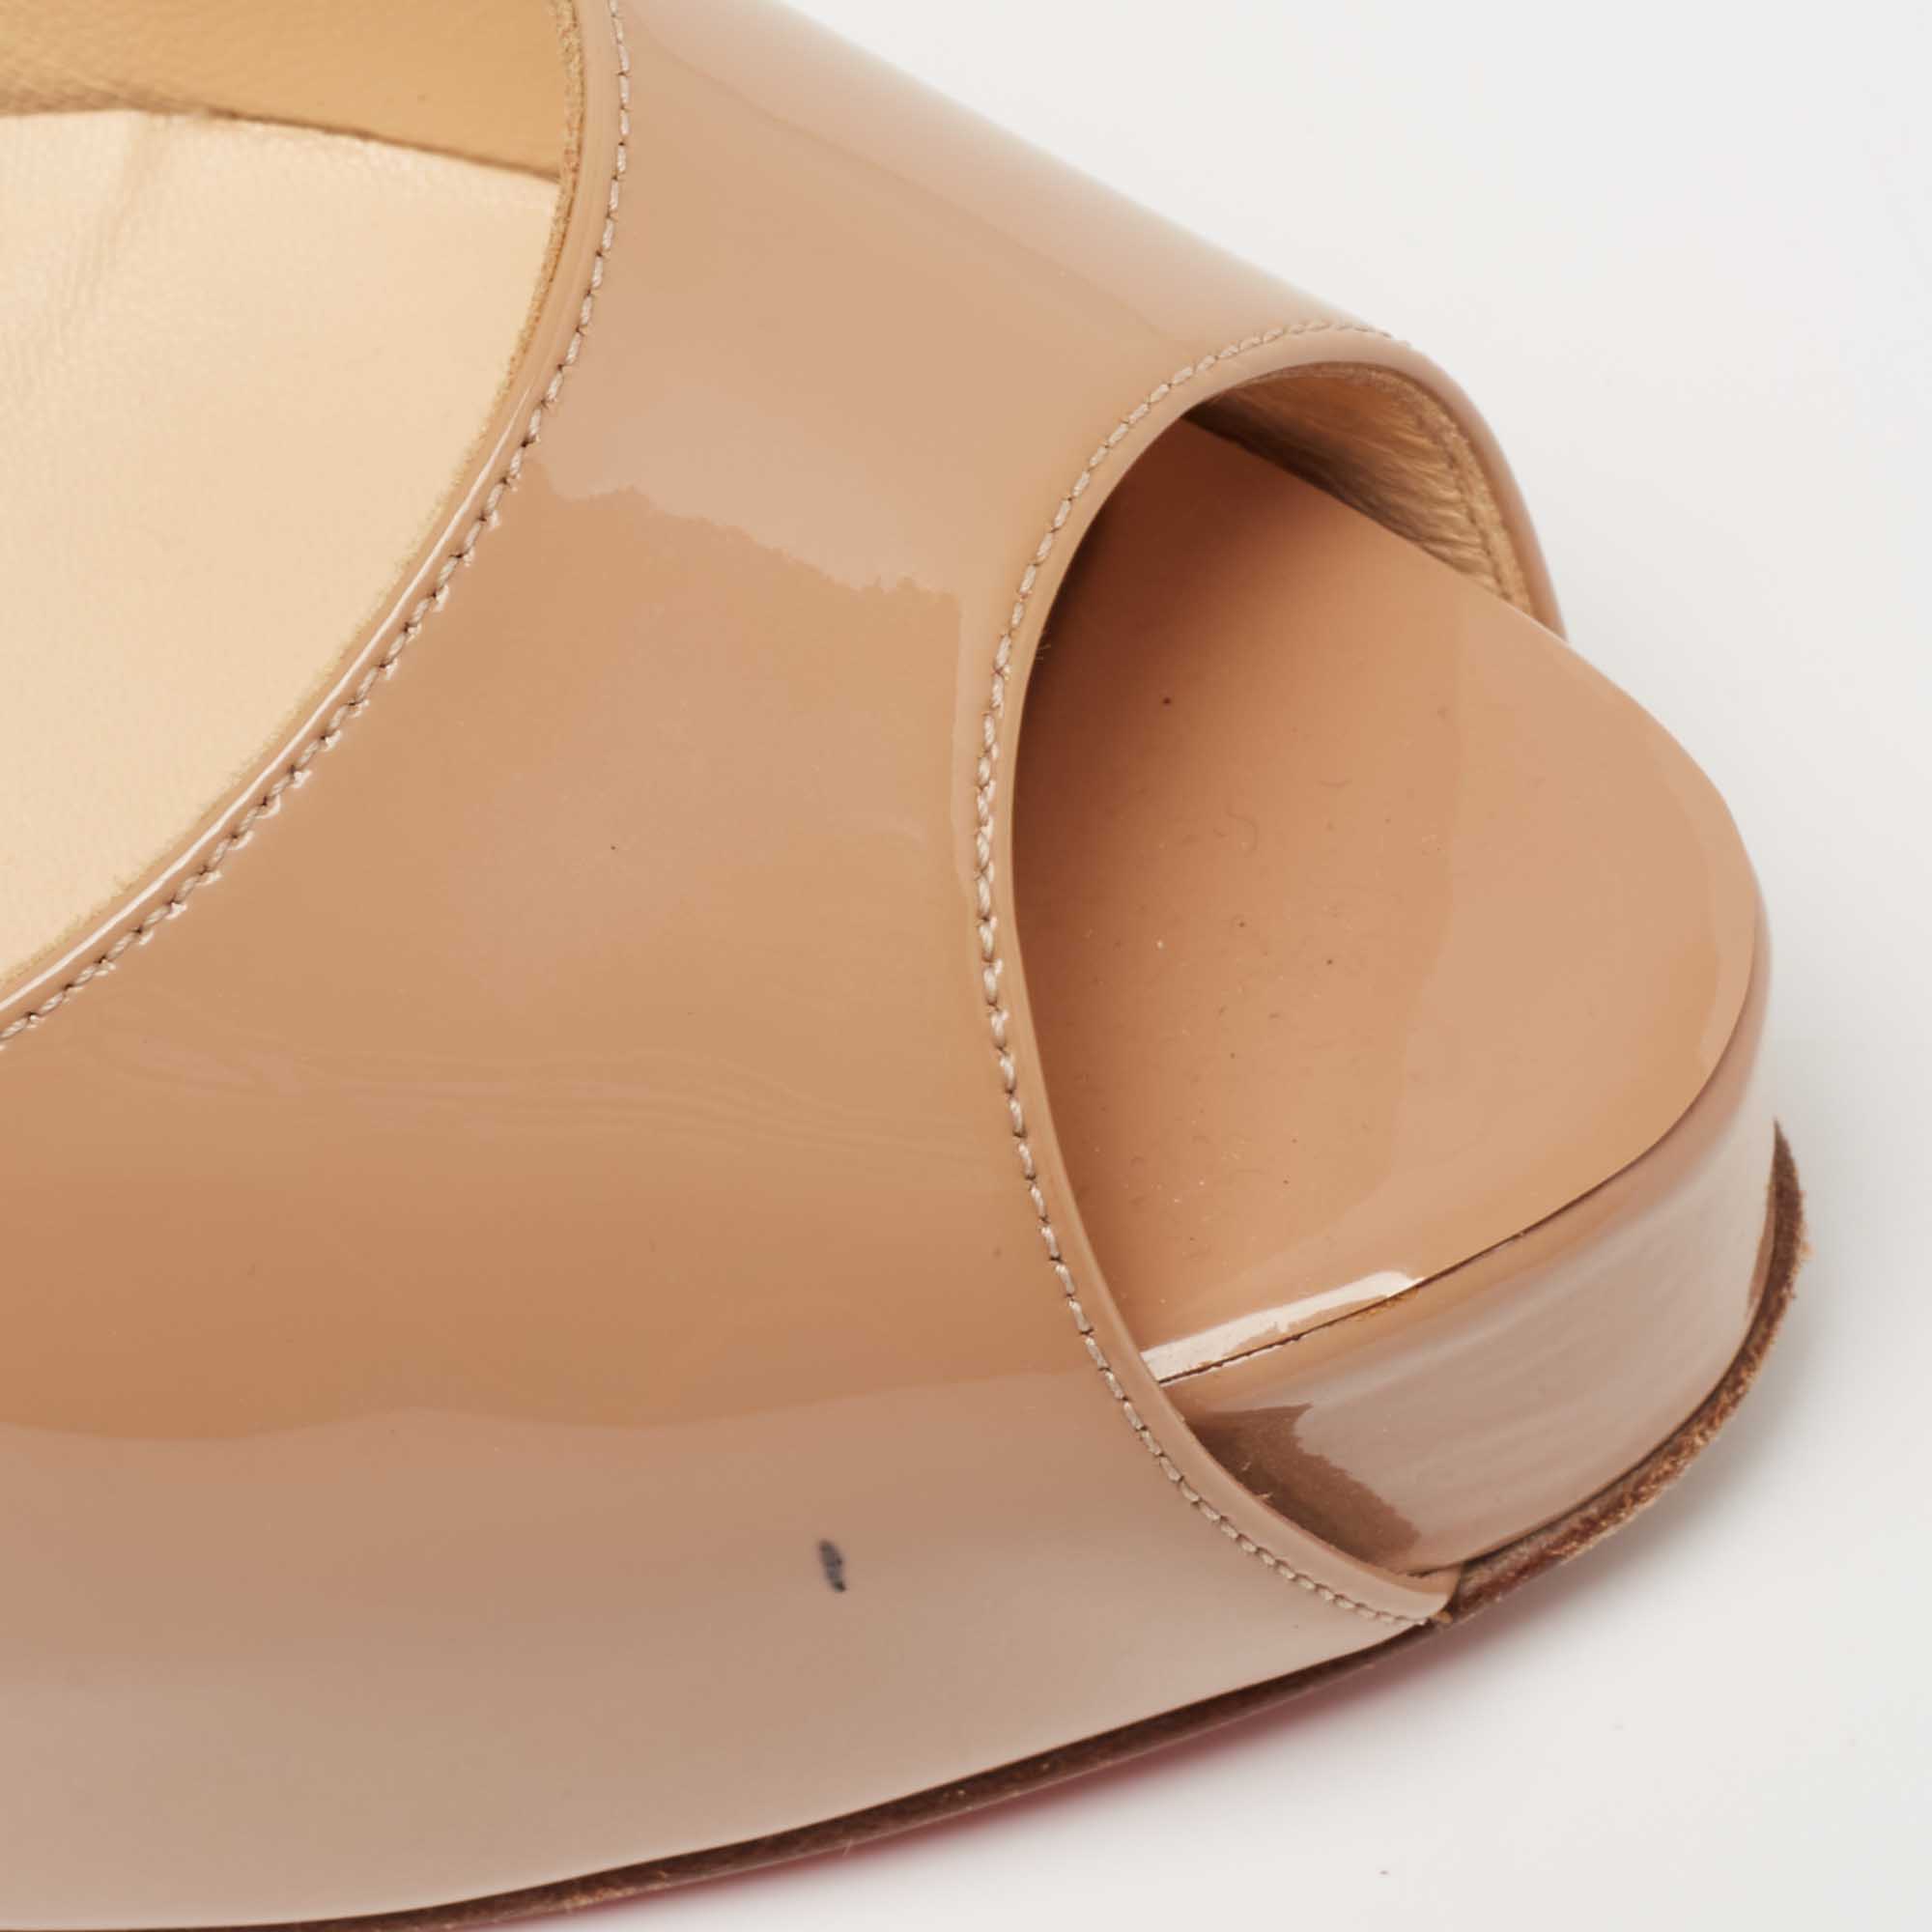 Christian Louboutin Beige Patent Leather Very Prive Peep Toe Platform Pumps Size 37.5